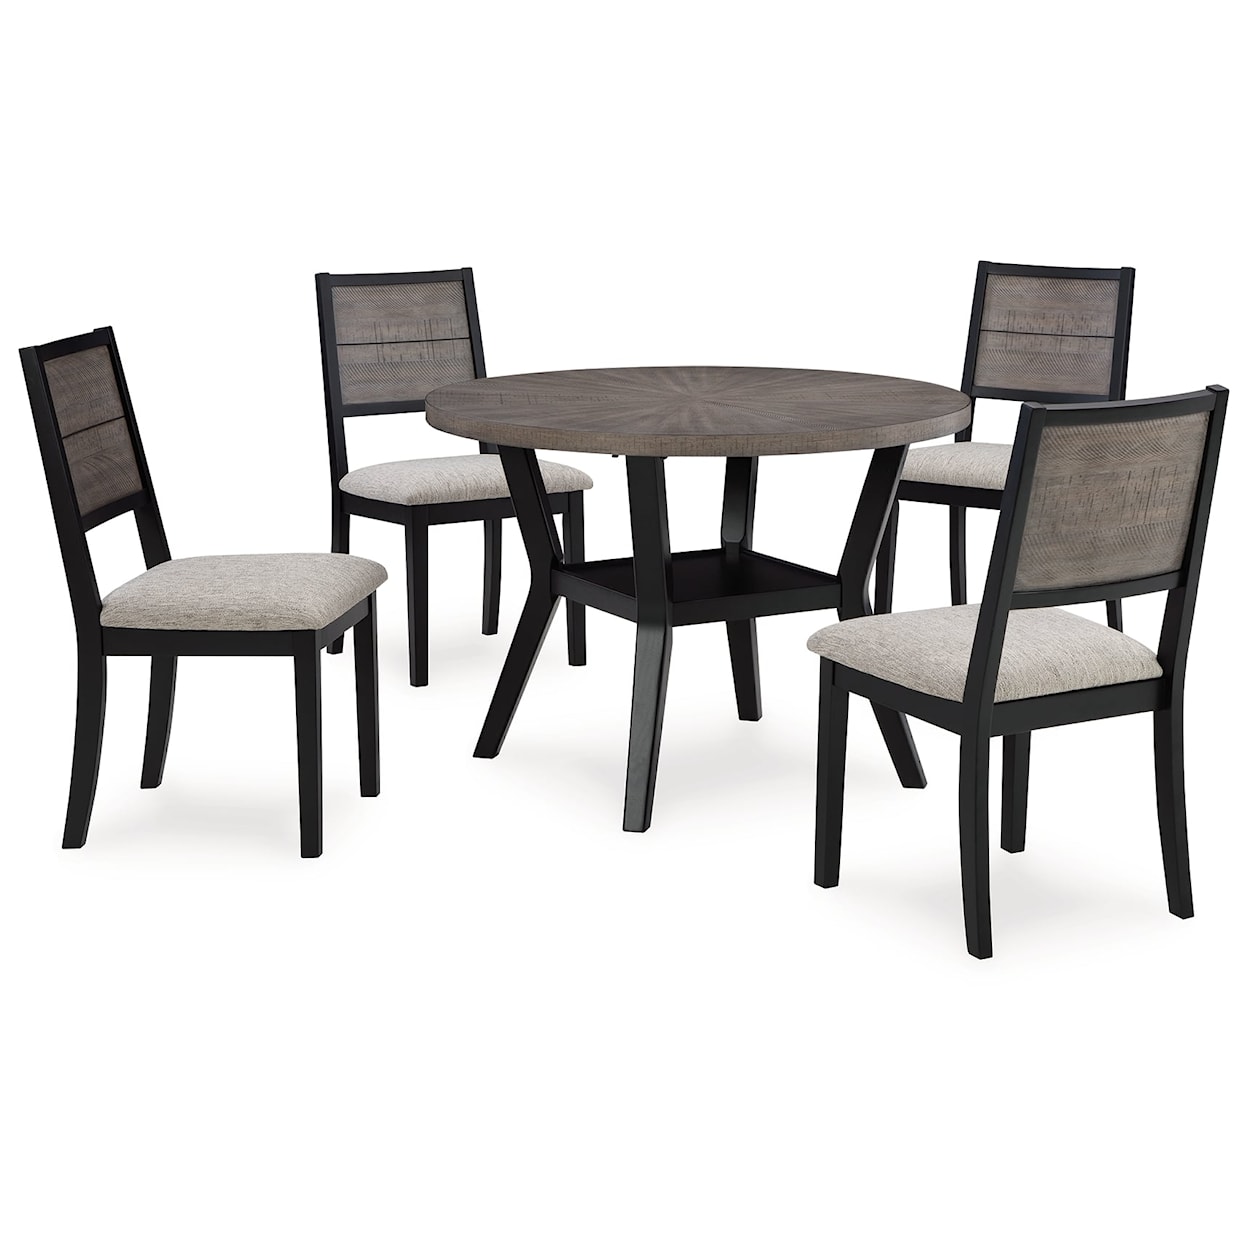 Benchcraft Corloda Round Table Set